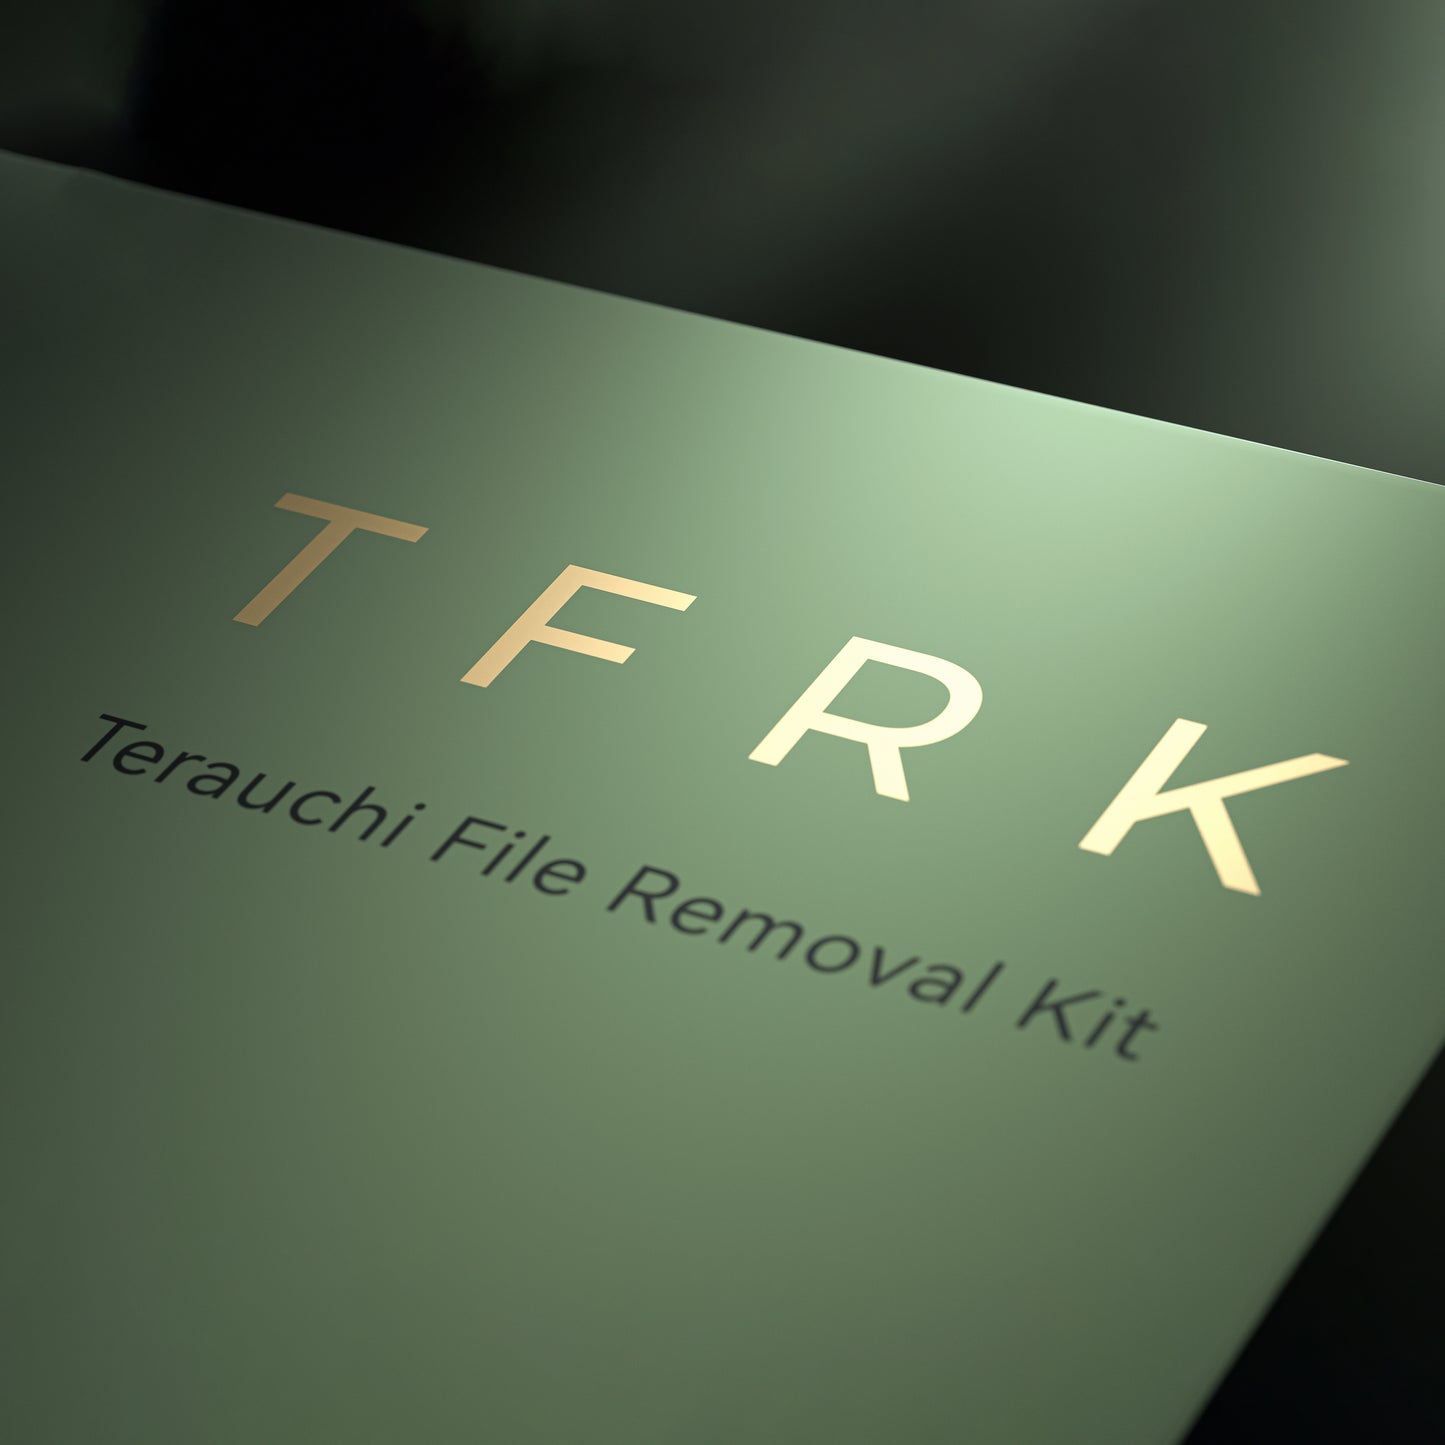 TFRK (Terauchi File Removal Kit)